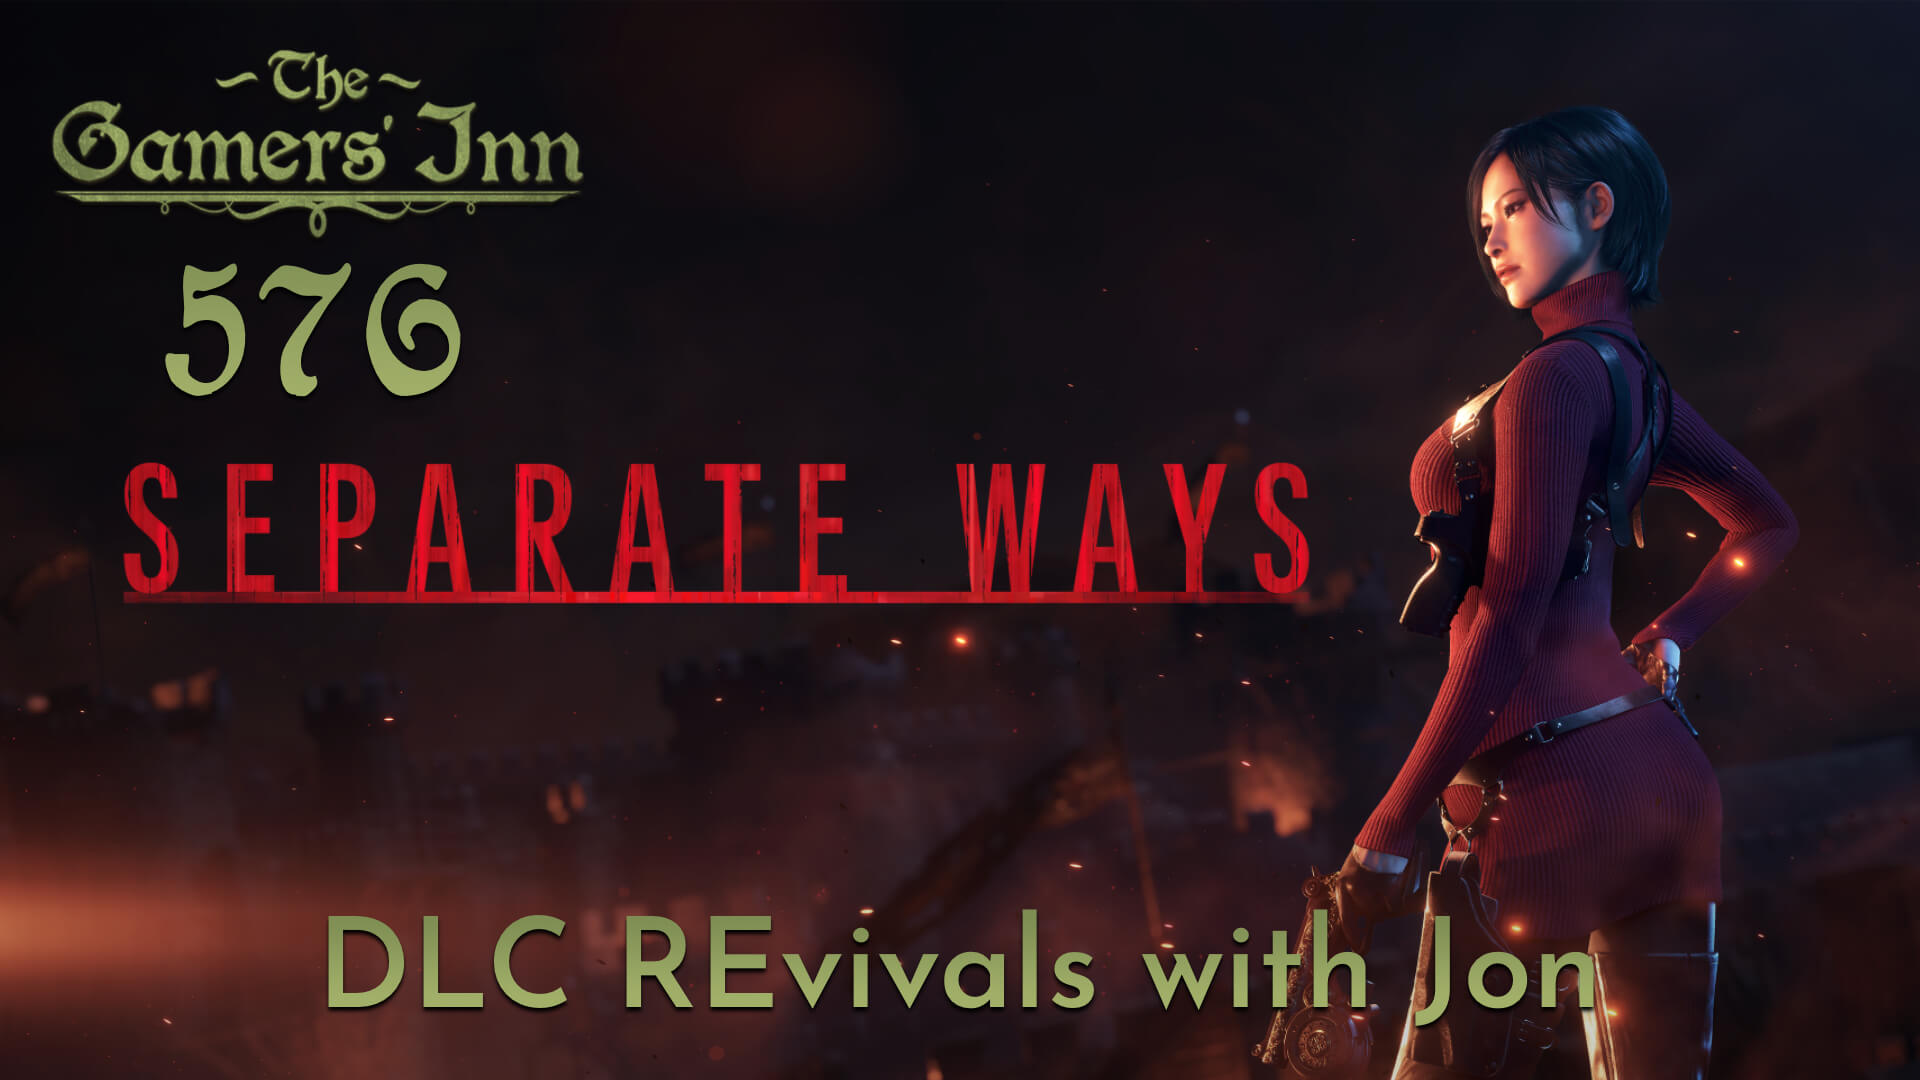 TGI 576 - Separate Ways - DLC REvivals with Jon